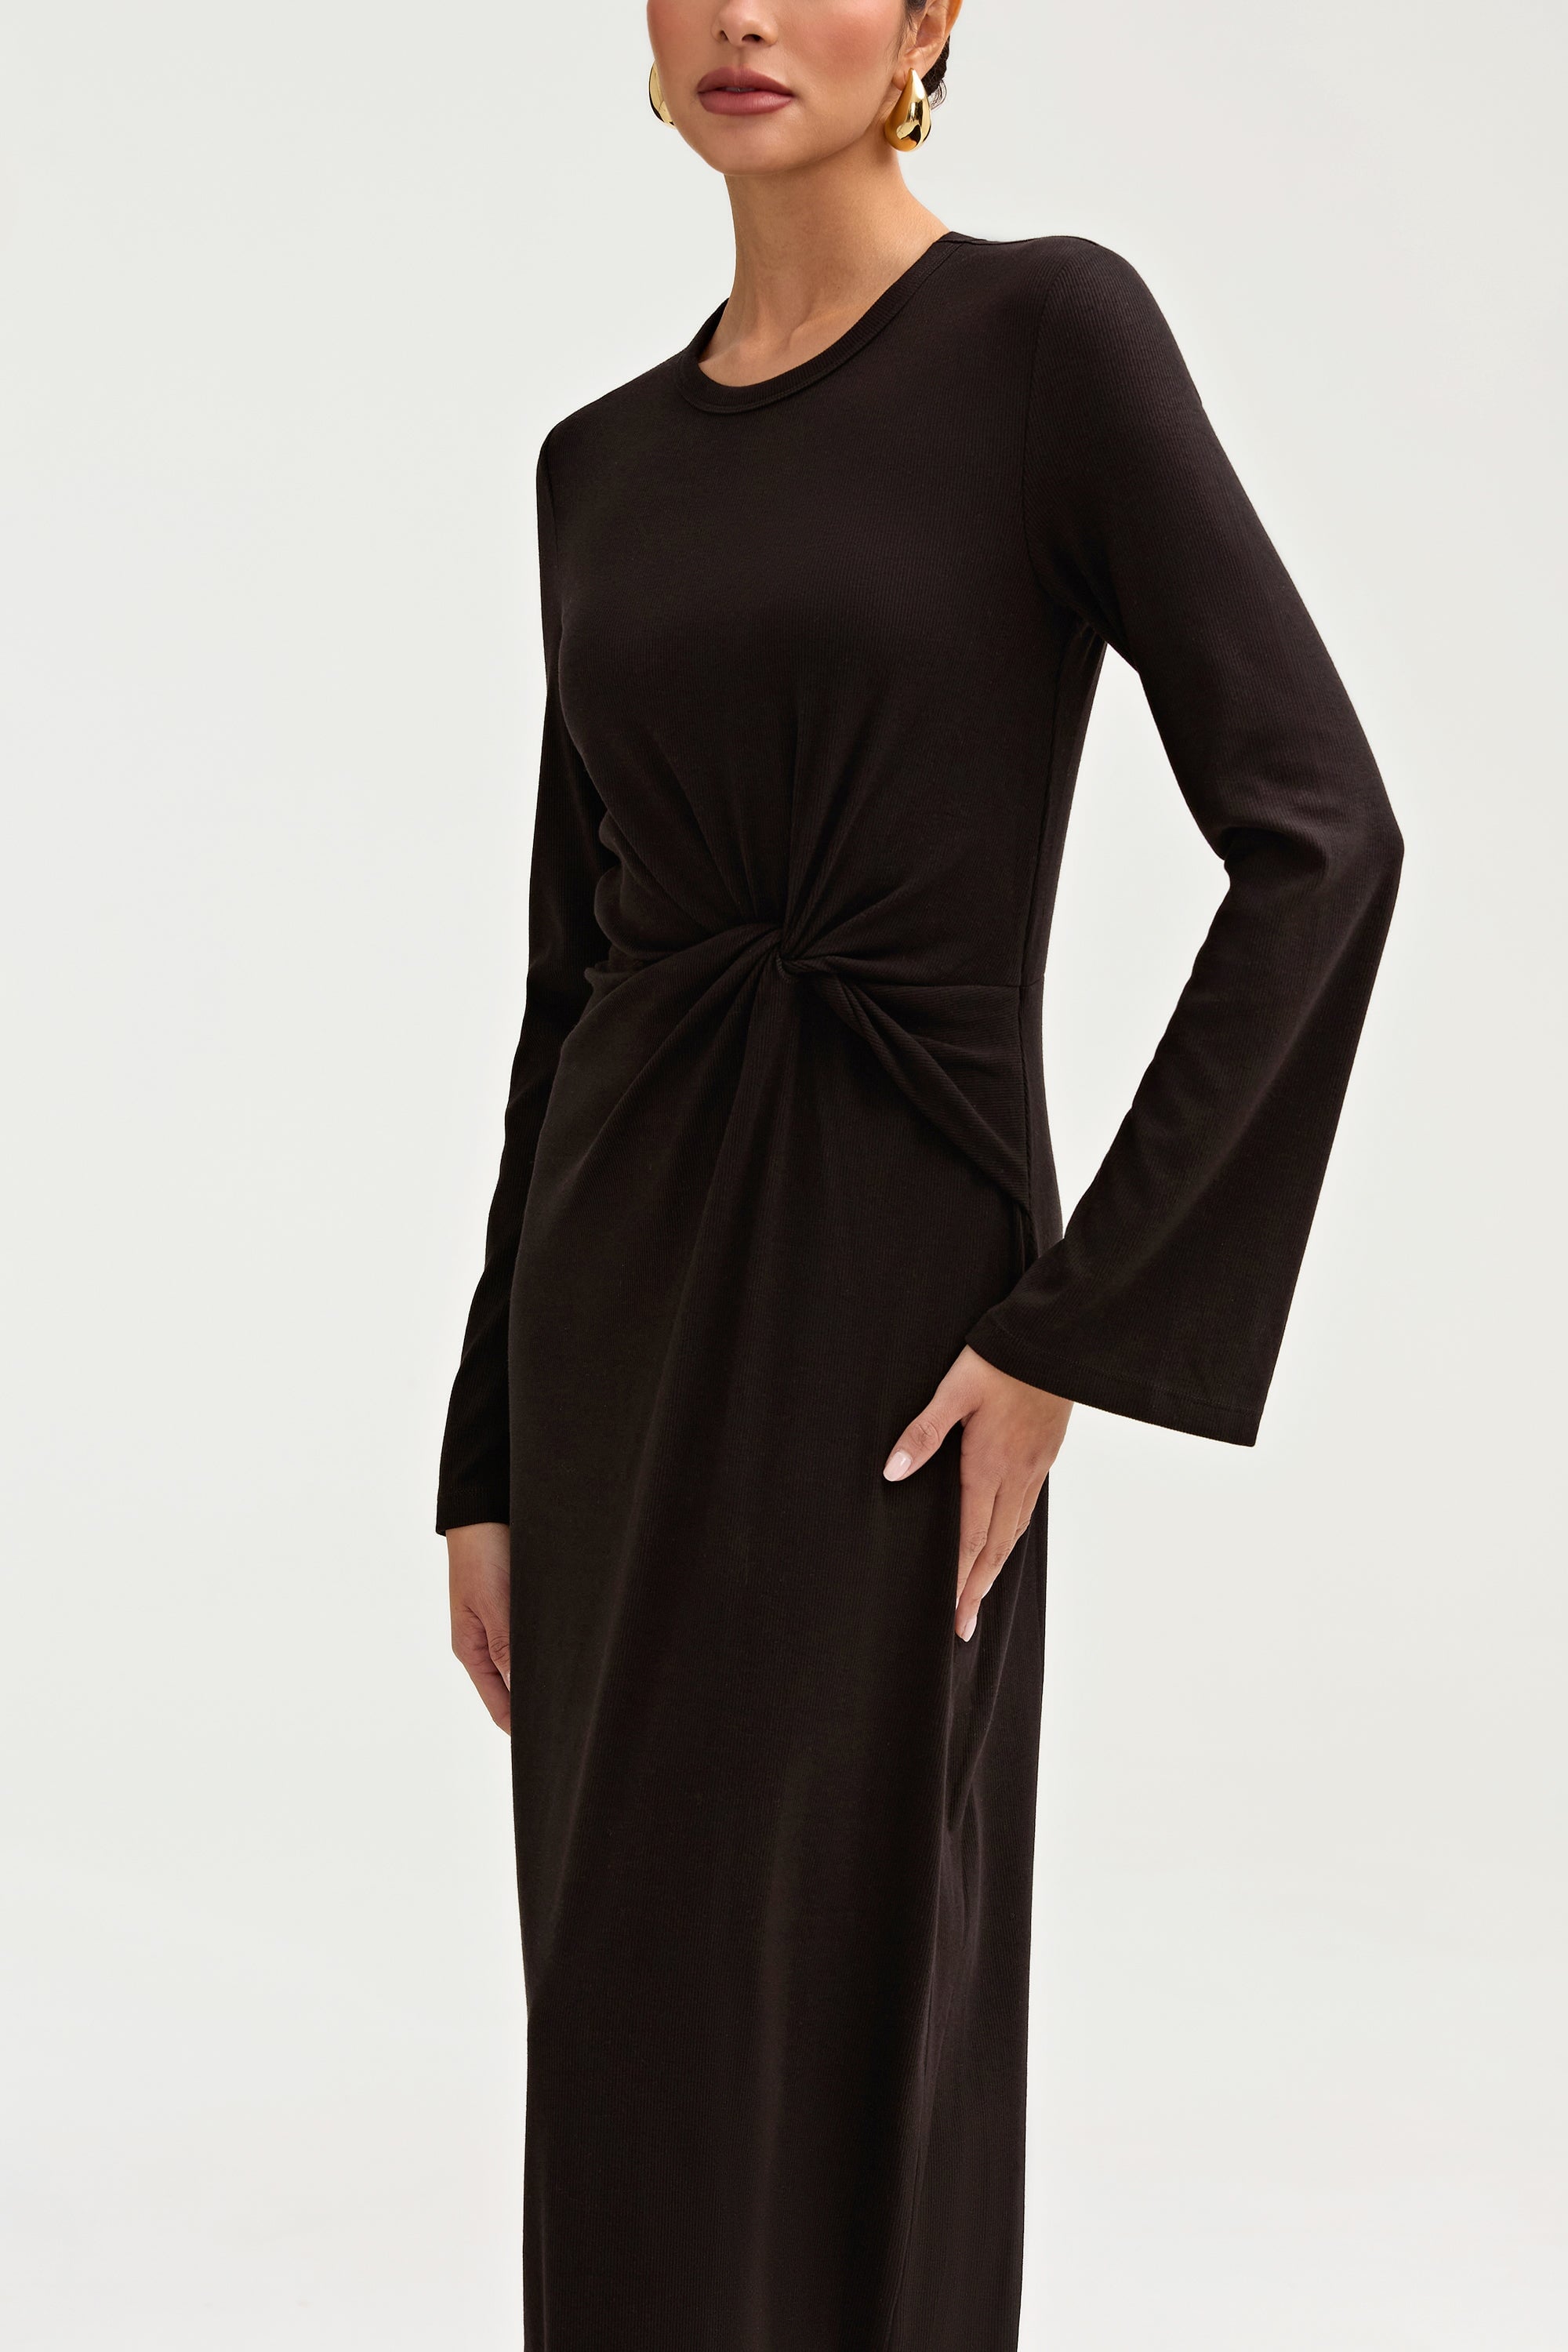 Aissia Ribbed Twist Front Maxi Dress - Black Clothing Veiled 